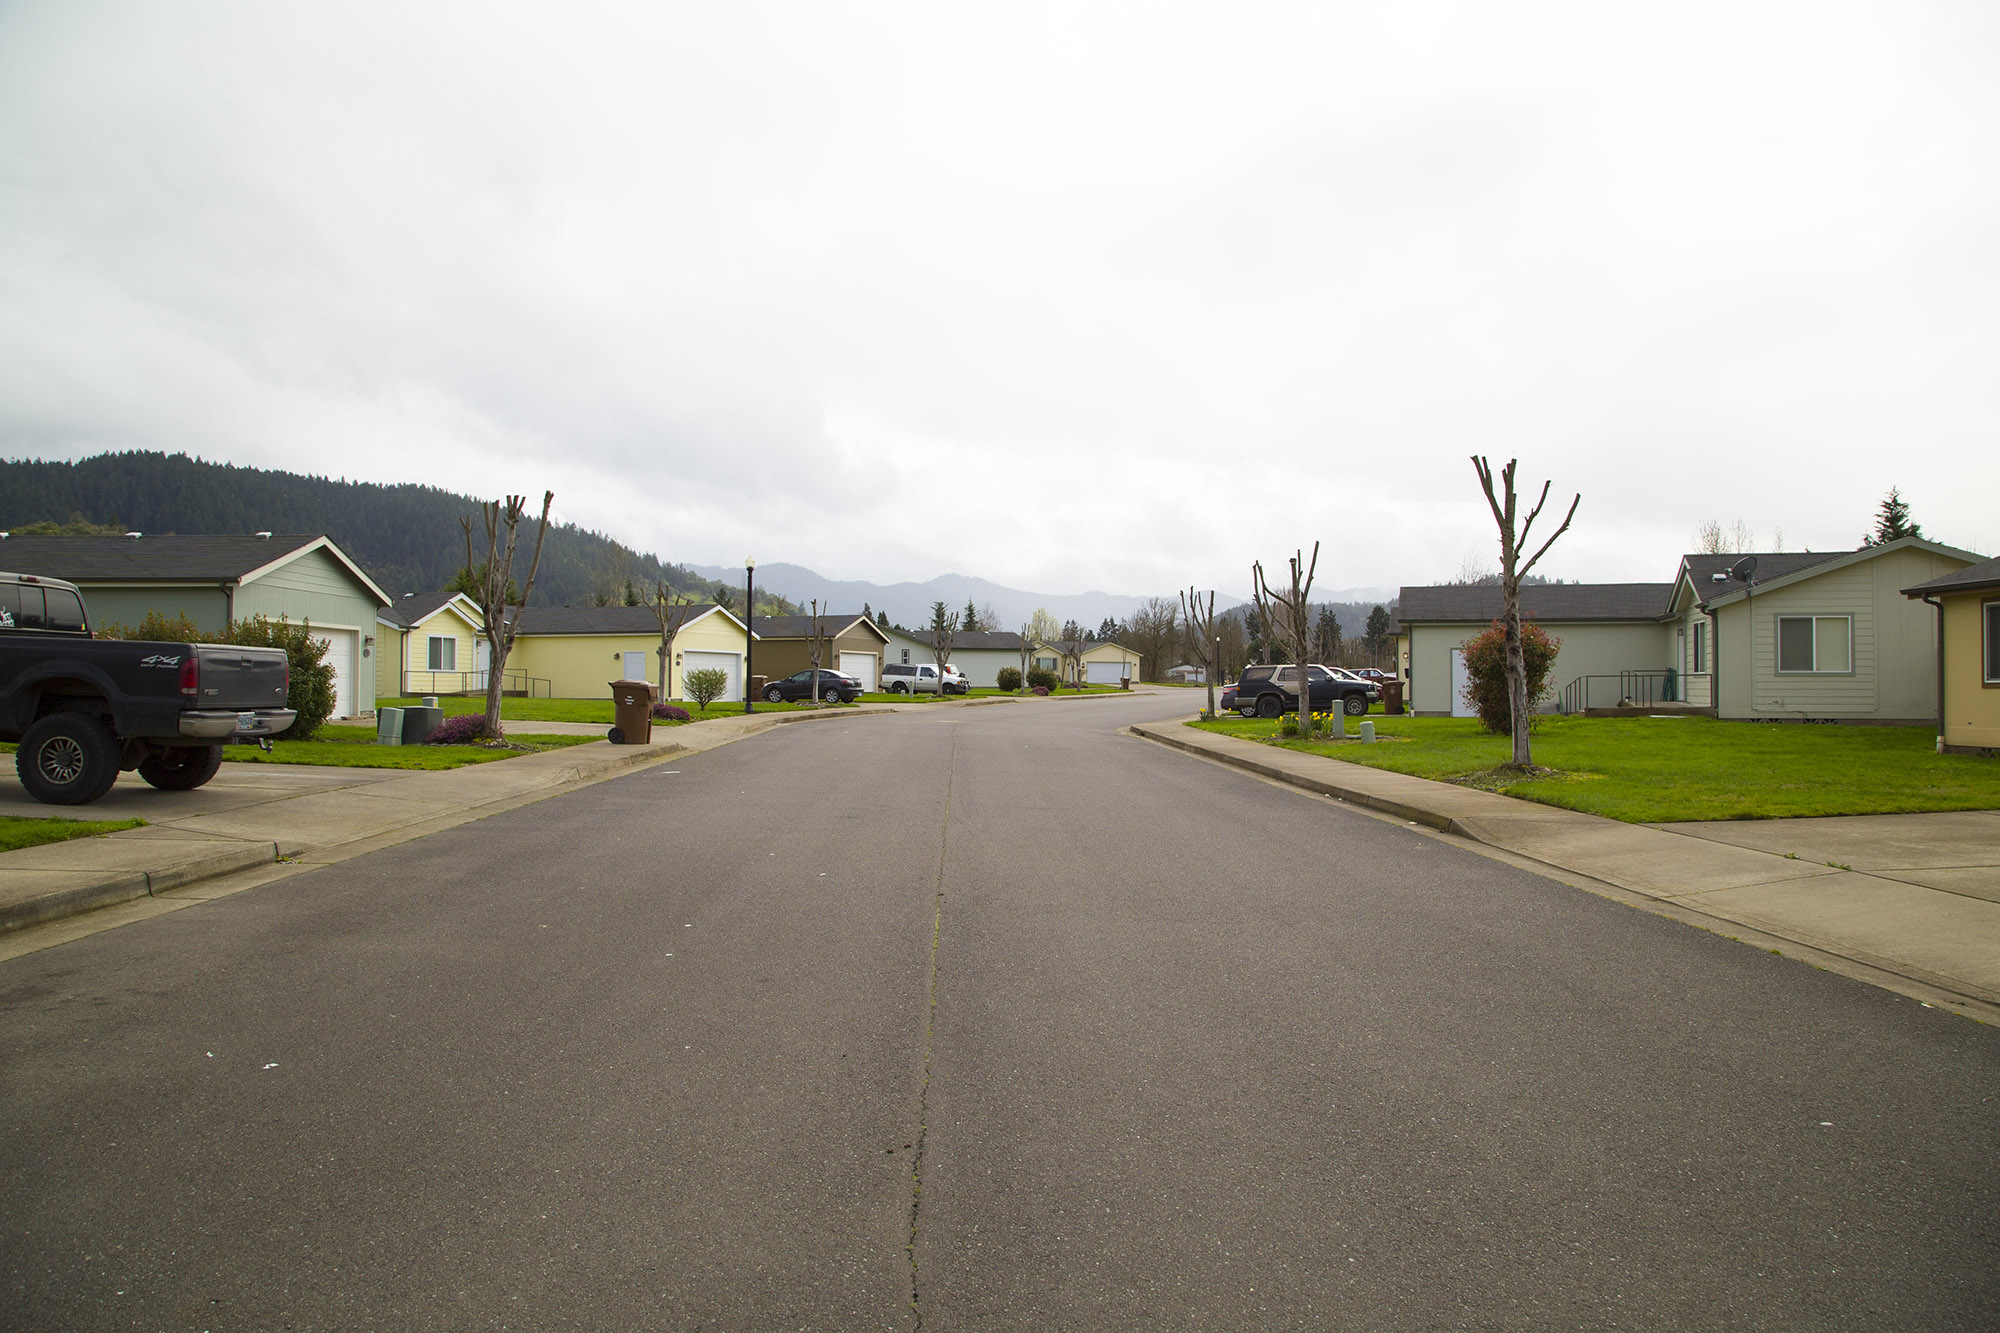 A street and row of homes near Cow Creek Oregon